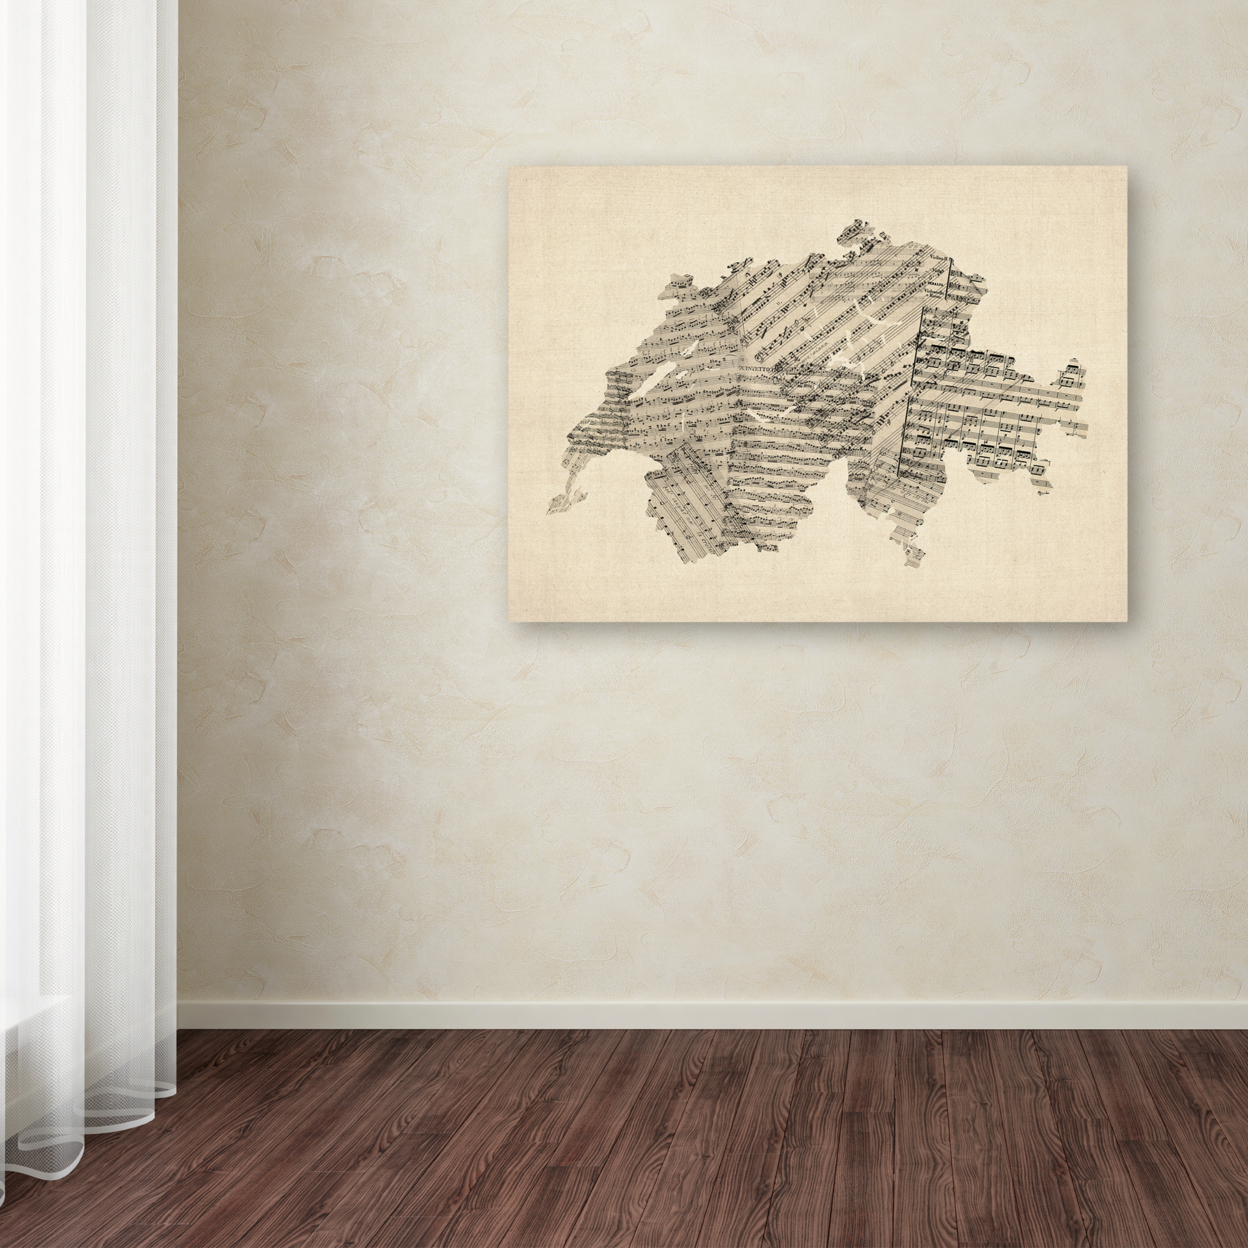 Michael Tompsett 'Old Sheet Music Map Of Switzerland' Canvas Wall Art 35 X 47 Inches